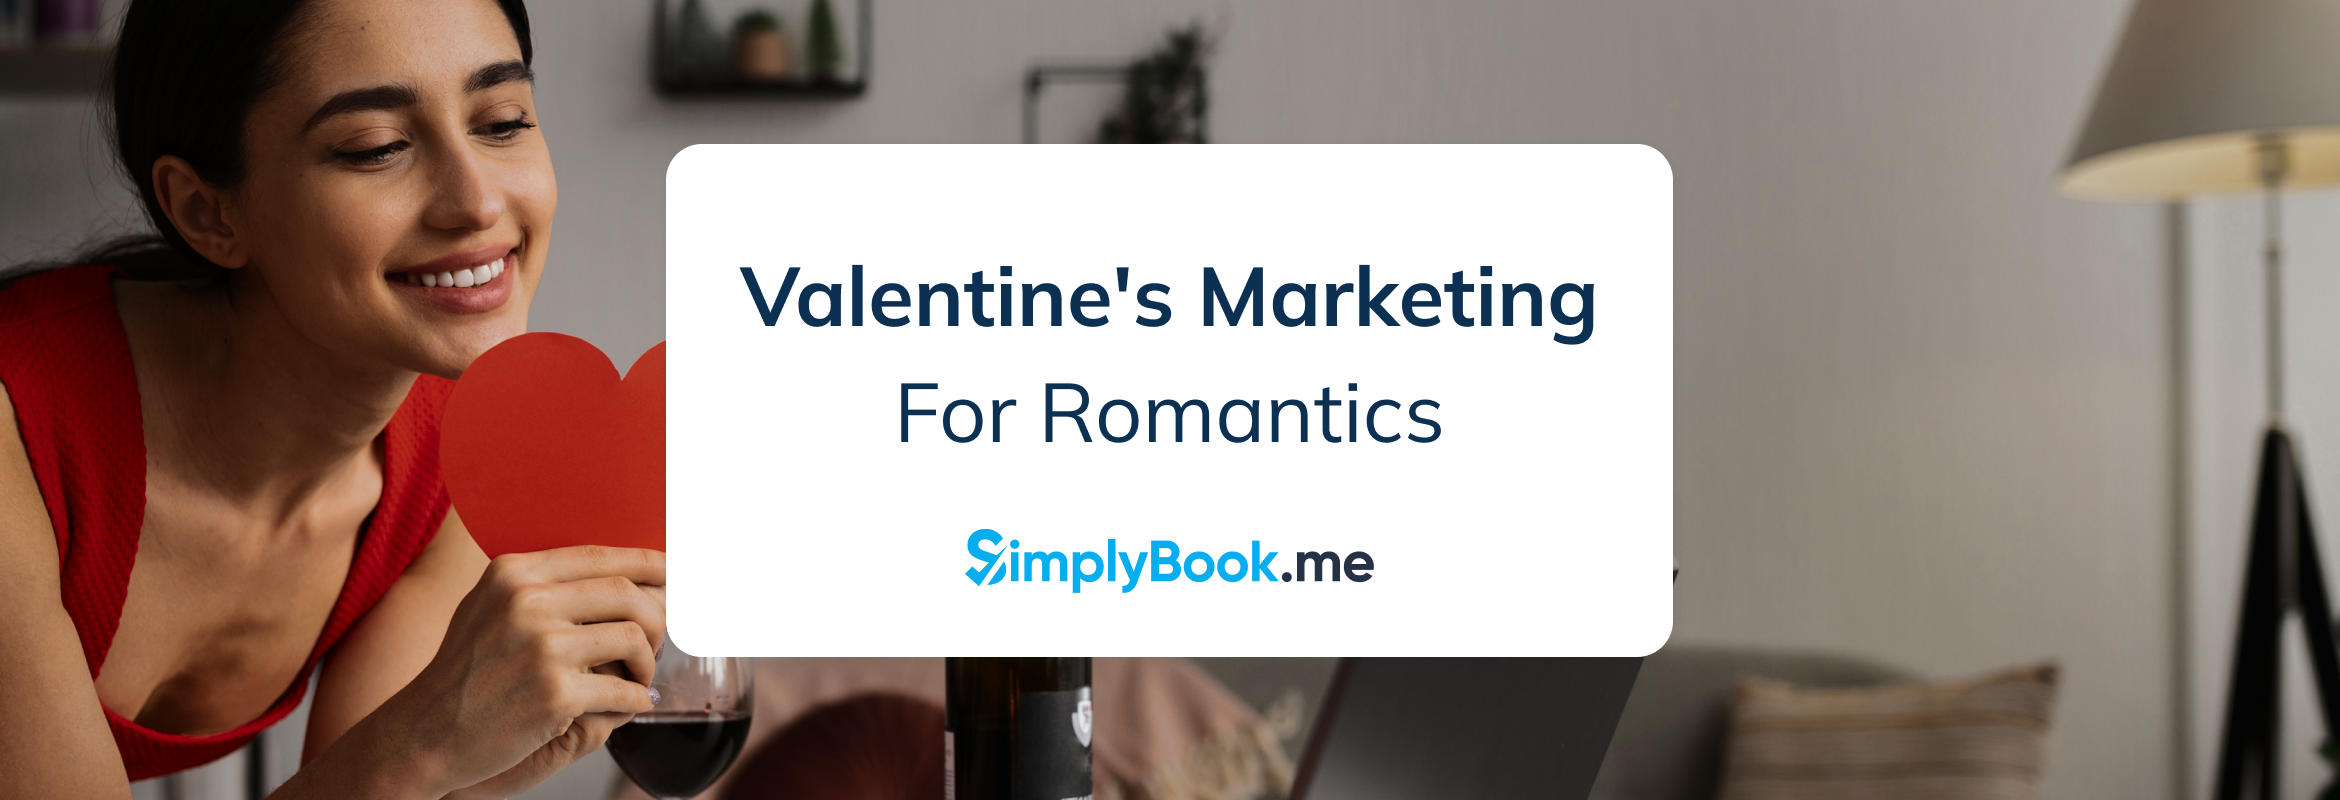 Valentine's marketing for romantics